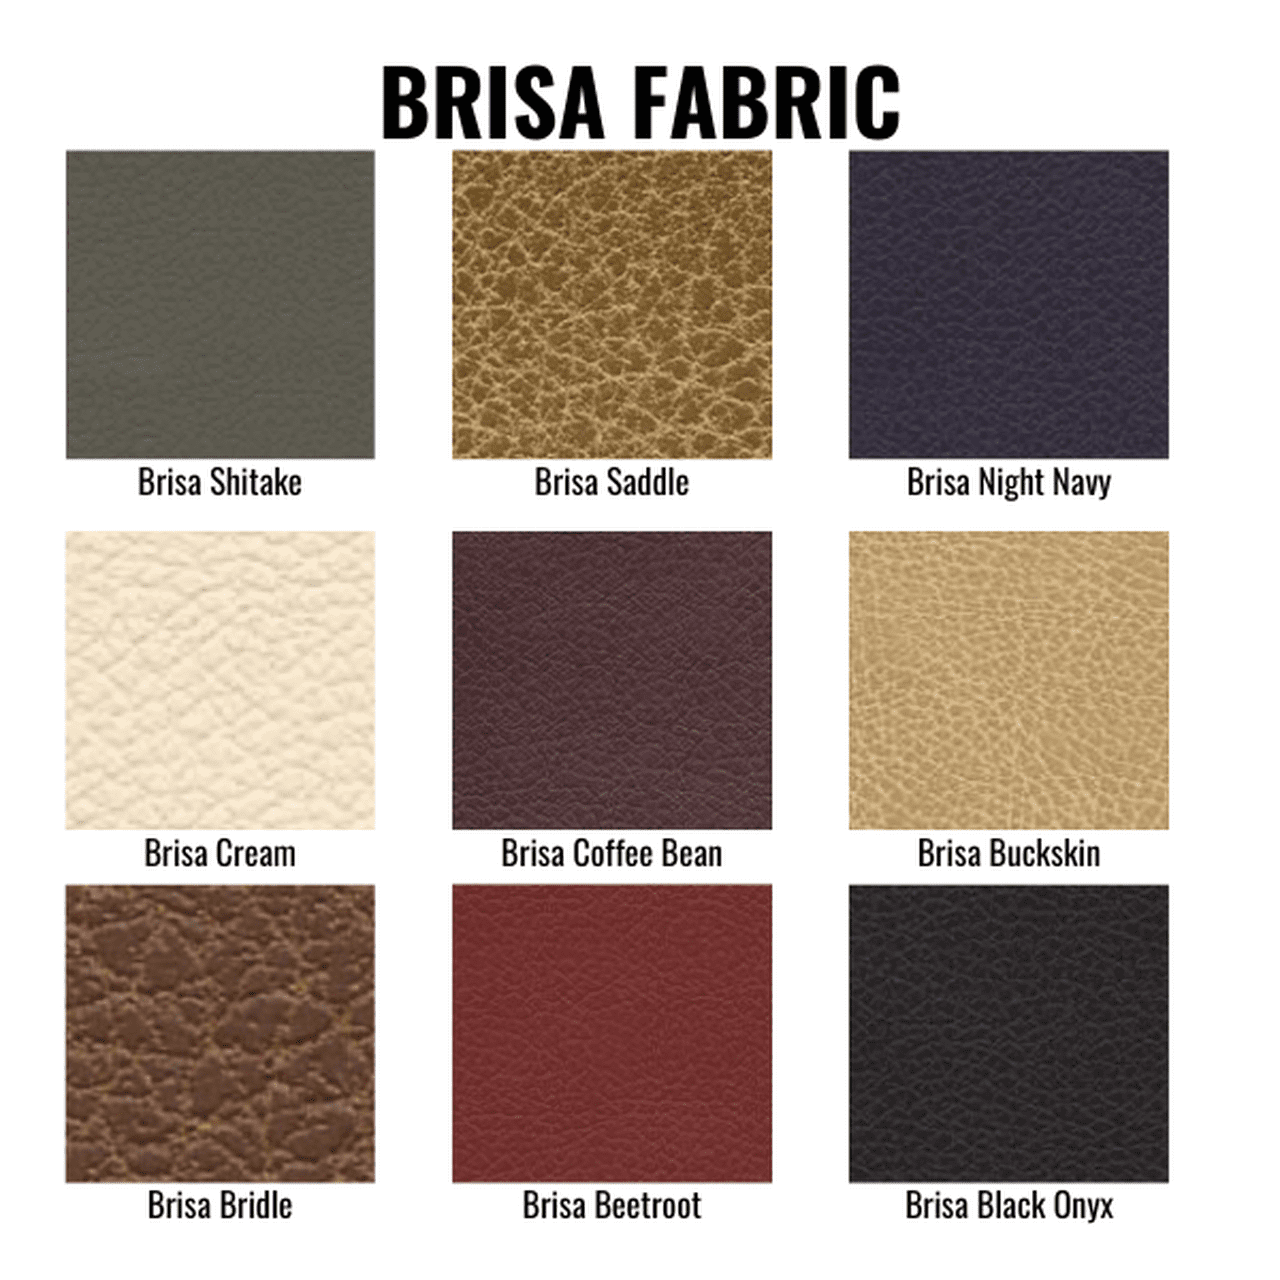 Brisa Lift Chair Colors